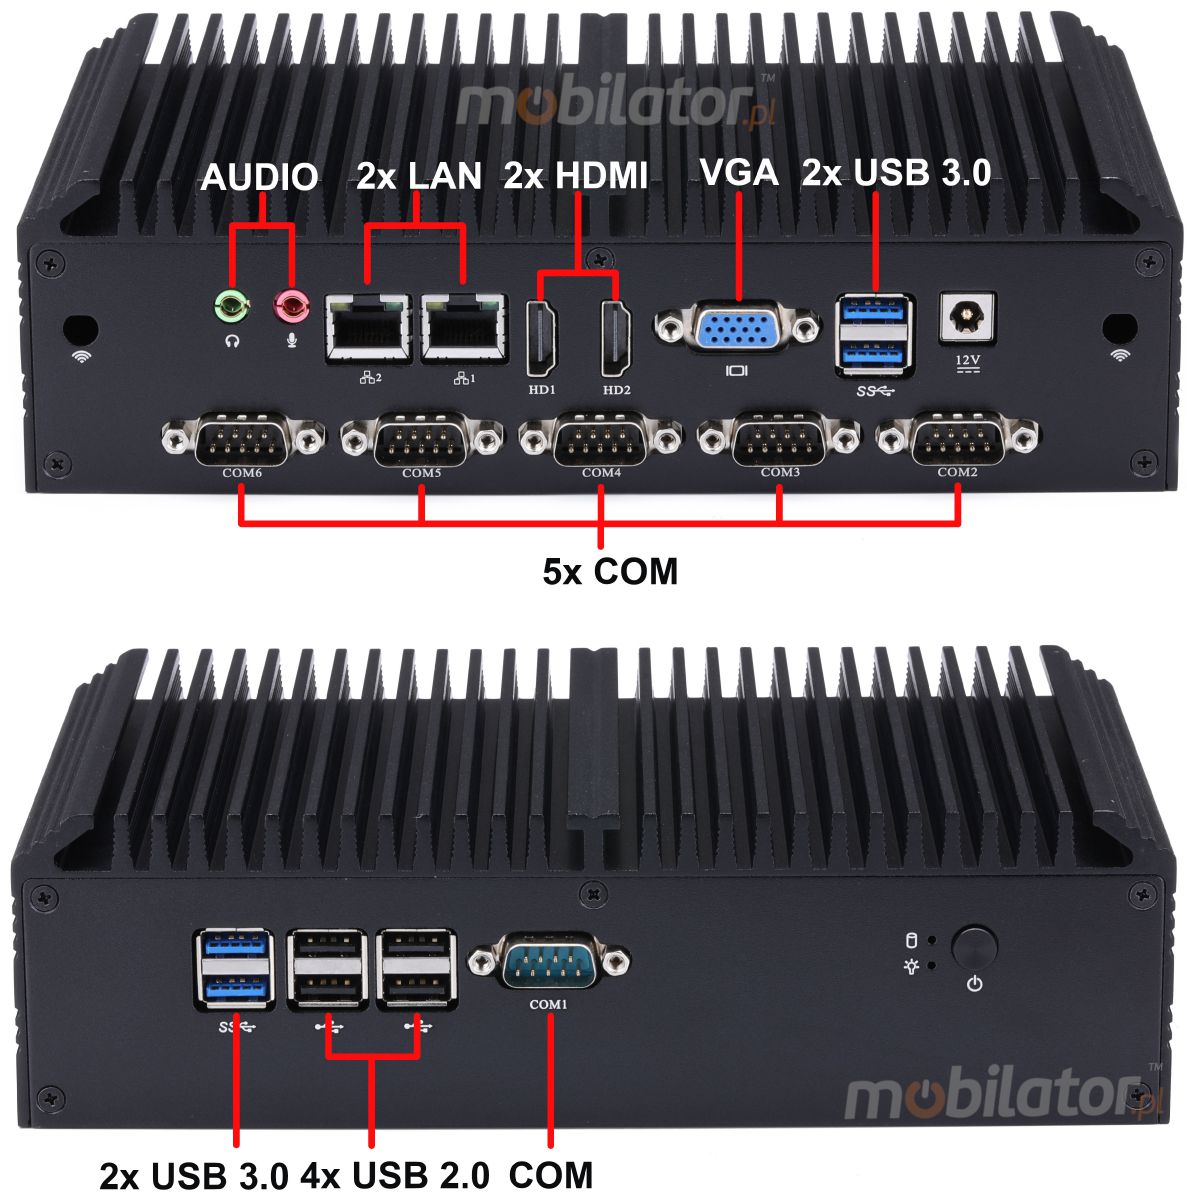 mBox X105 v.1 - Industrial Mini Computer with Intel Celeron 3855U Processor - M.2 disk - USB 3.0, 2x HDMI - Interfaces